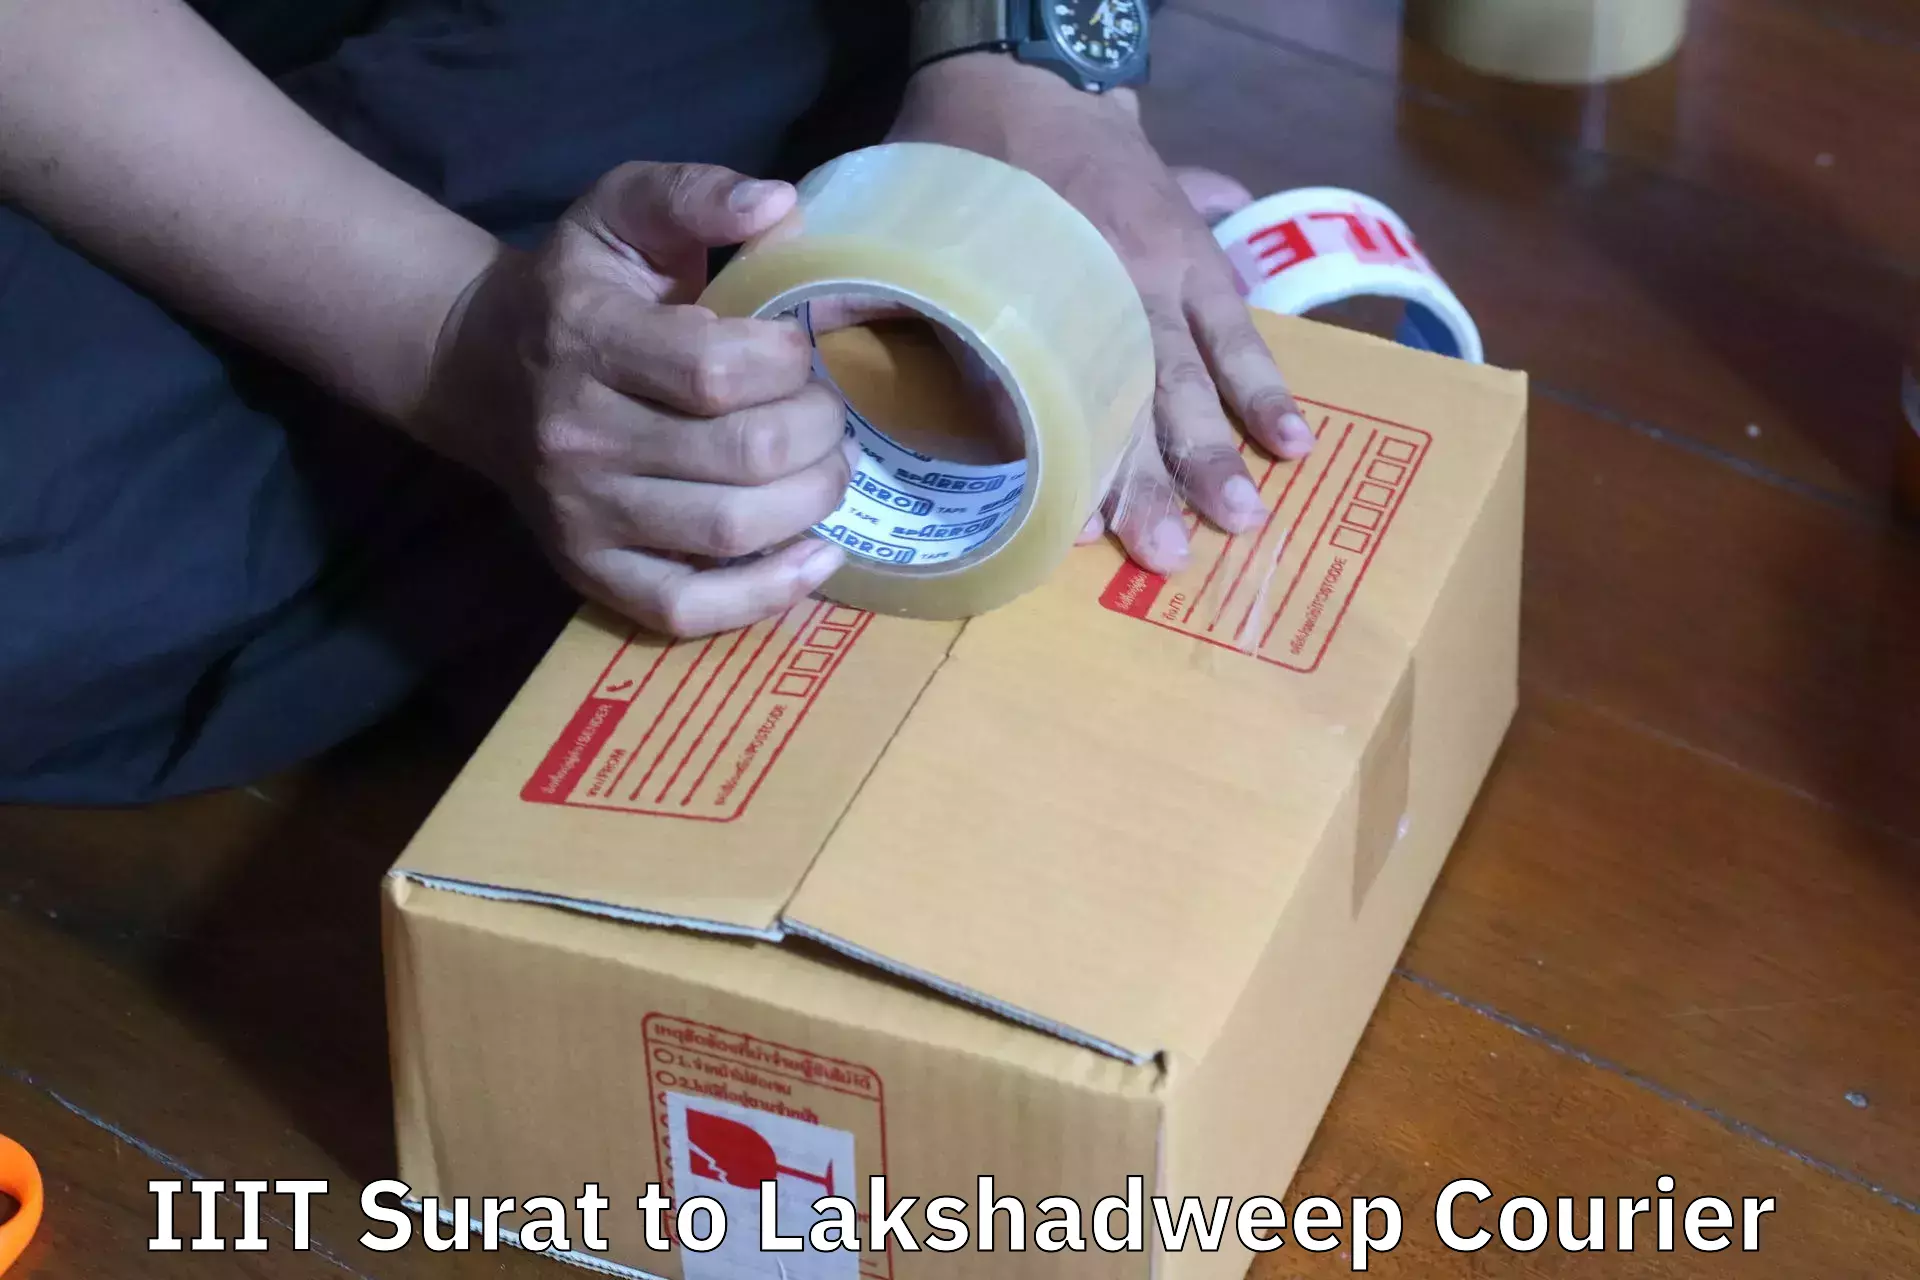 Professional moving company IIIT Surat to Lakshadweep